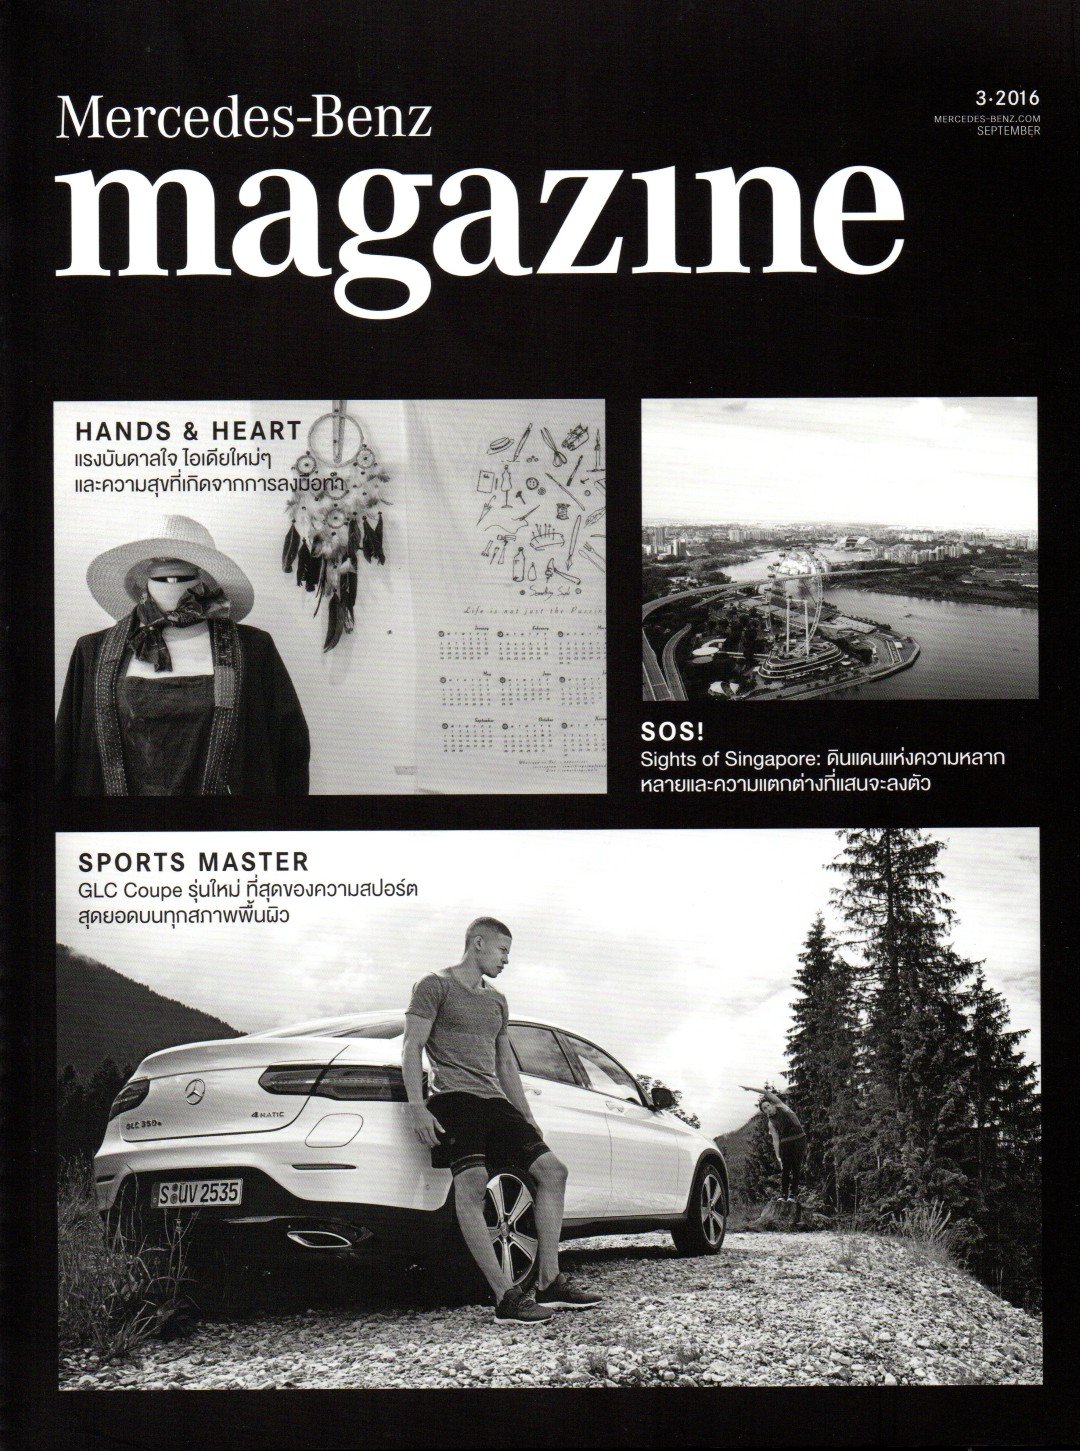 Lee Seng Jewelry in Mercedes Benz Magazine ,Issue 3.2016...ห้างเพชรหลีเสง ผู้ผลิตเพชรรายเดียวในหนังสือ Mercedes BENZ...